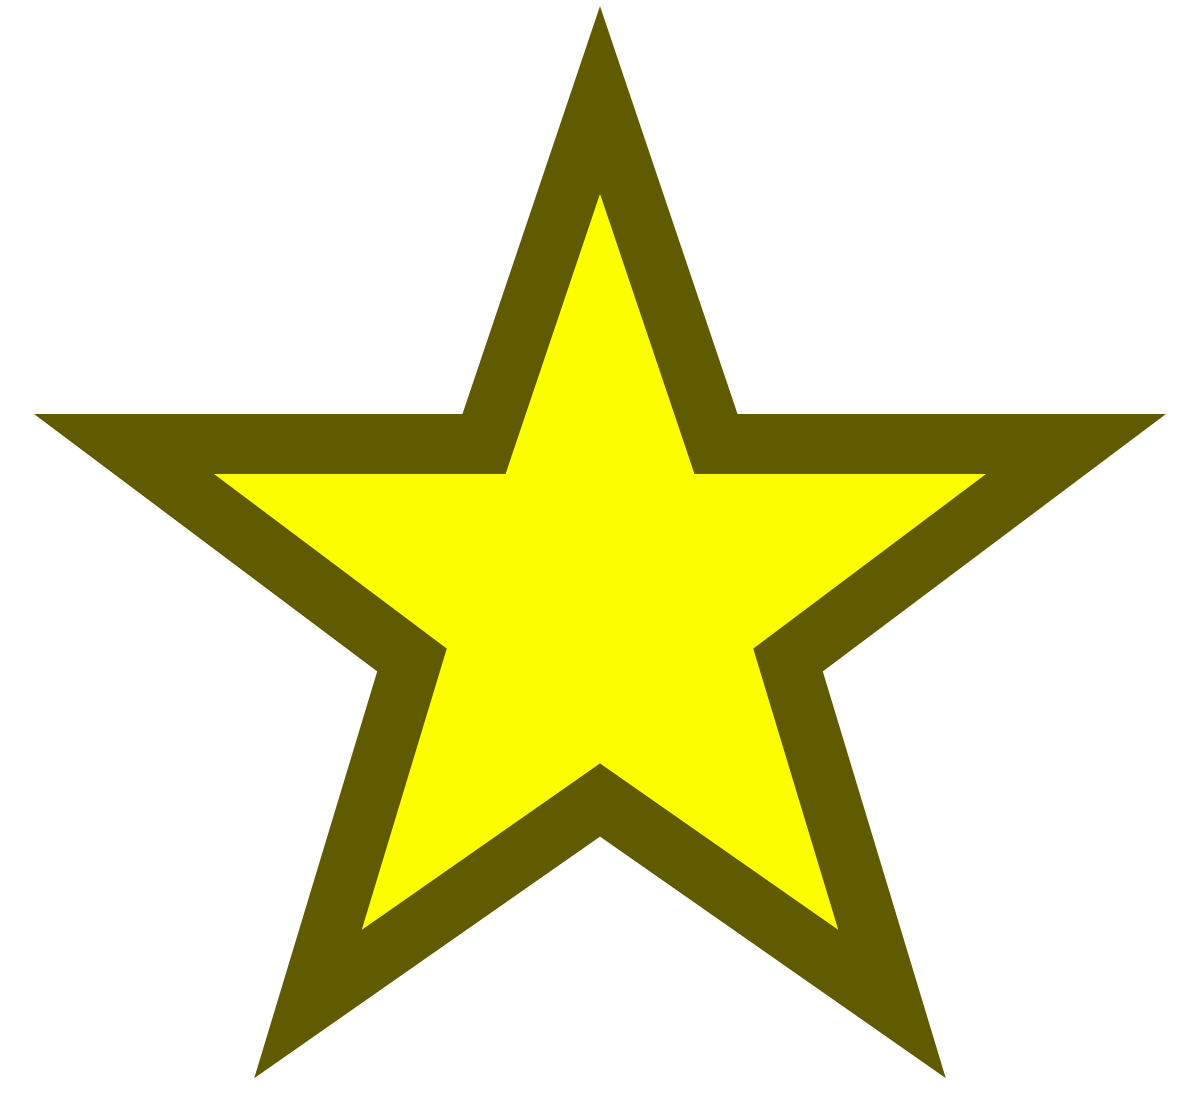 File:All-StarsLogo.jpg - Wikimedia Commons